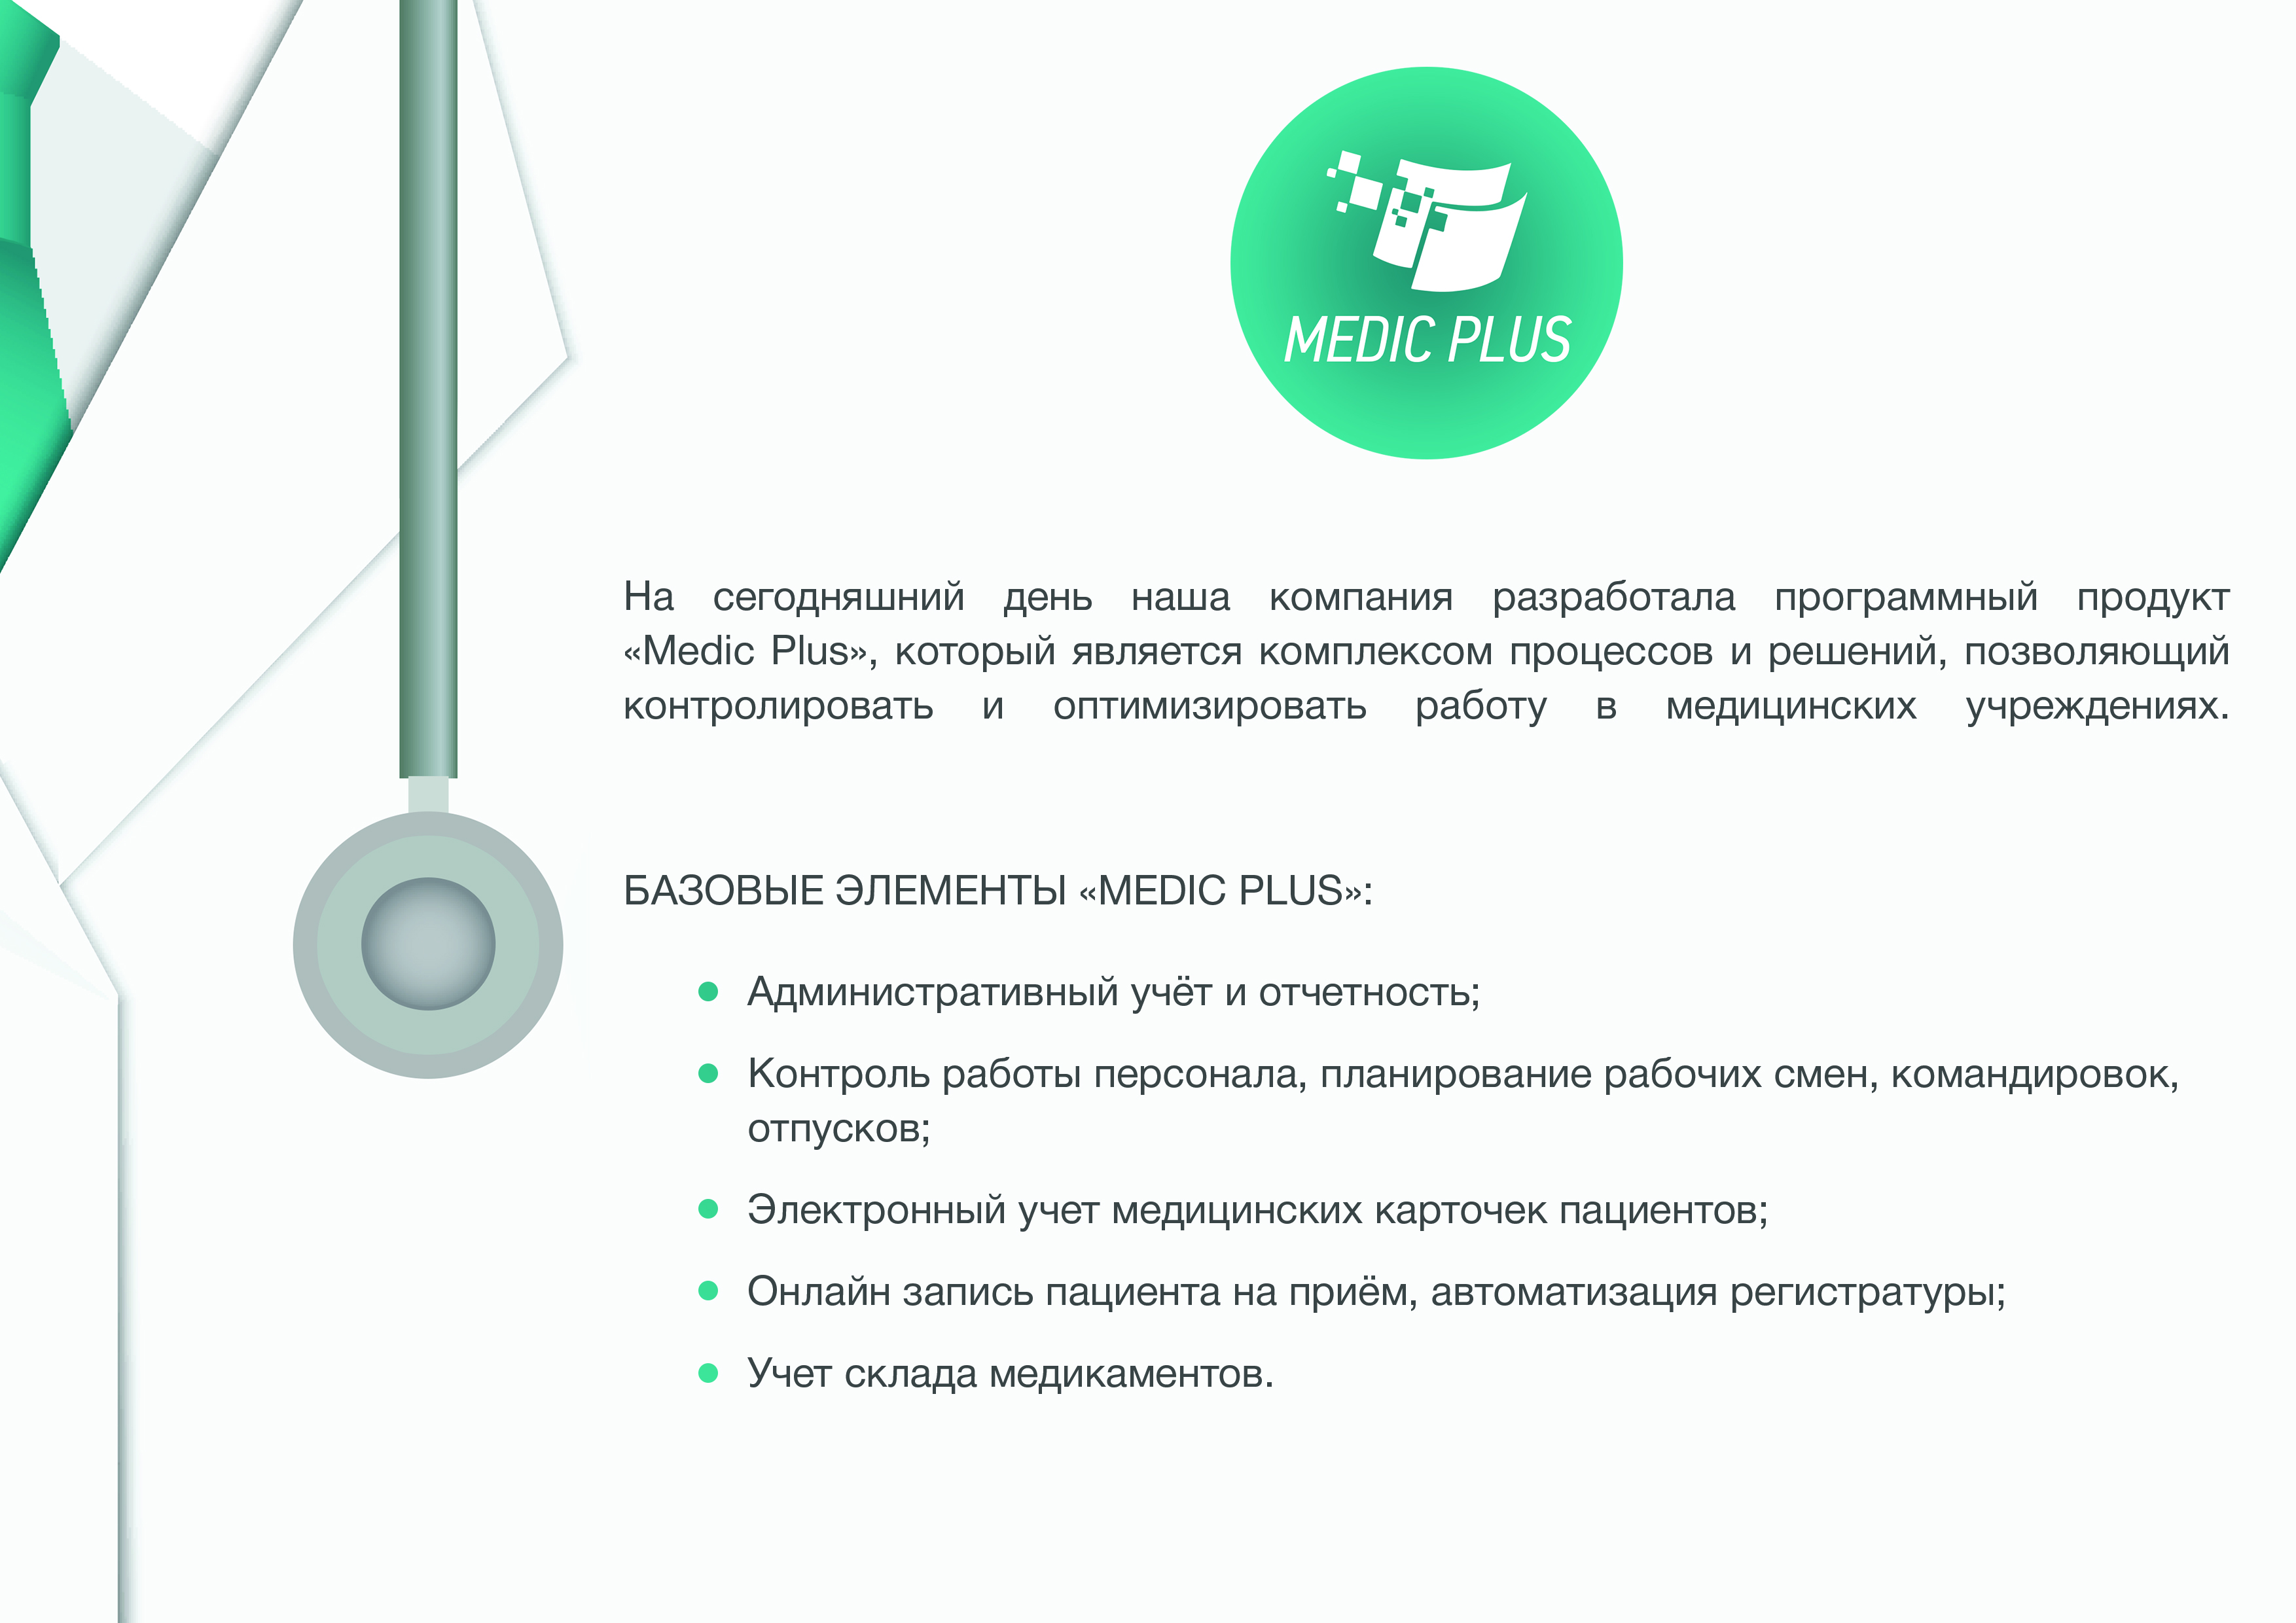 Medic Plus presentation img1